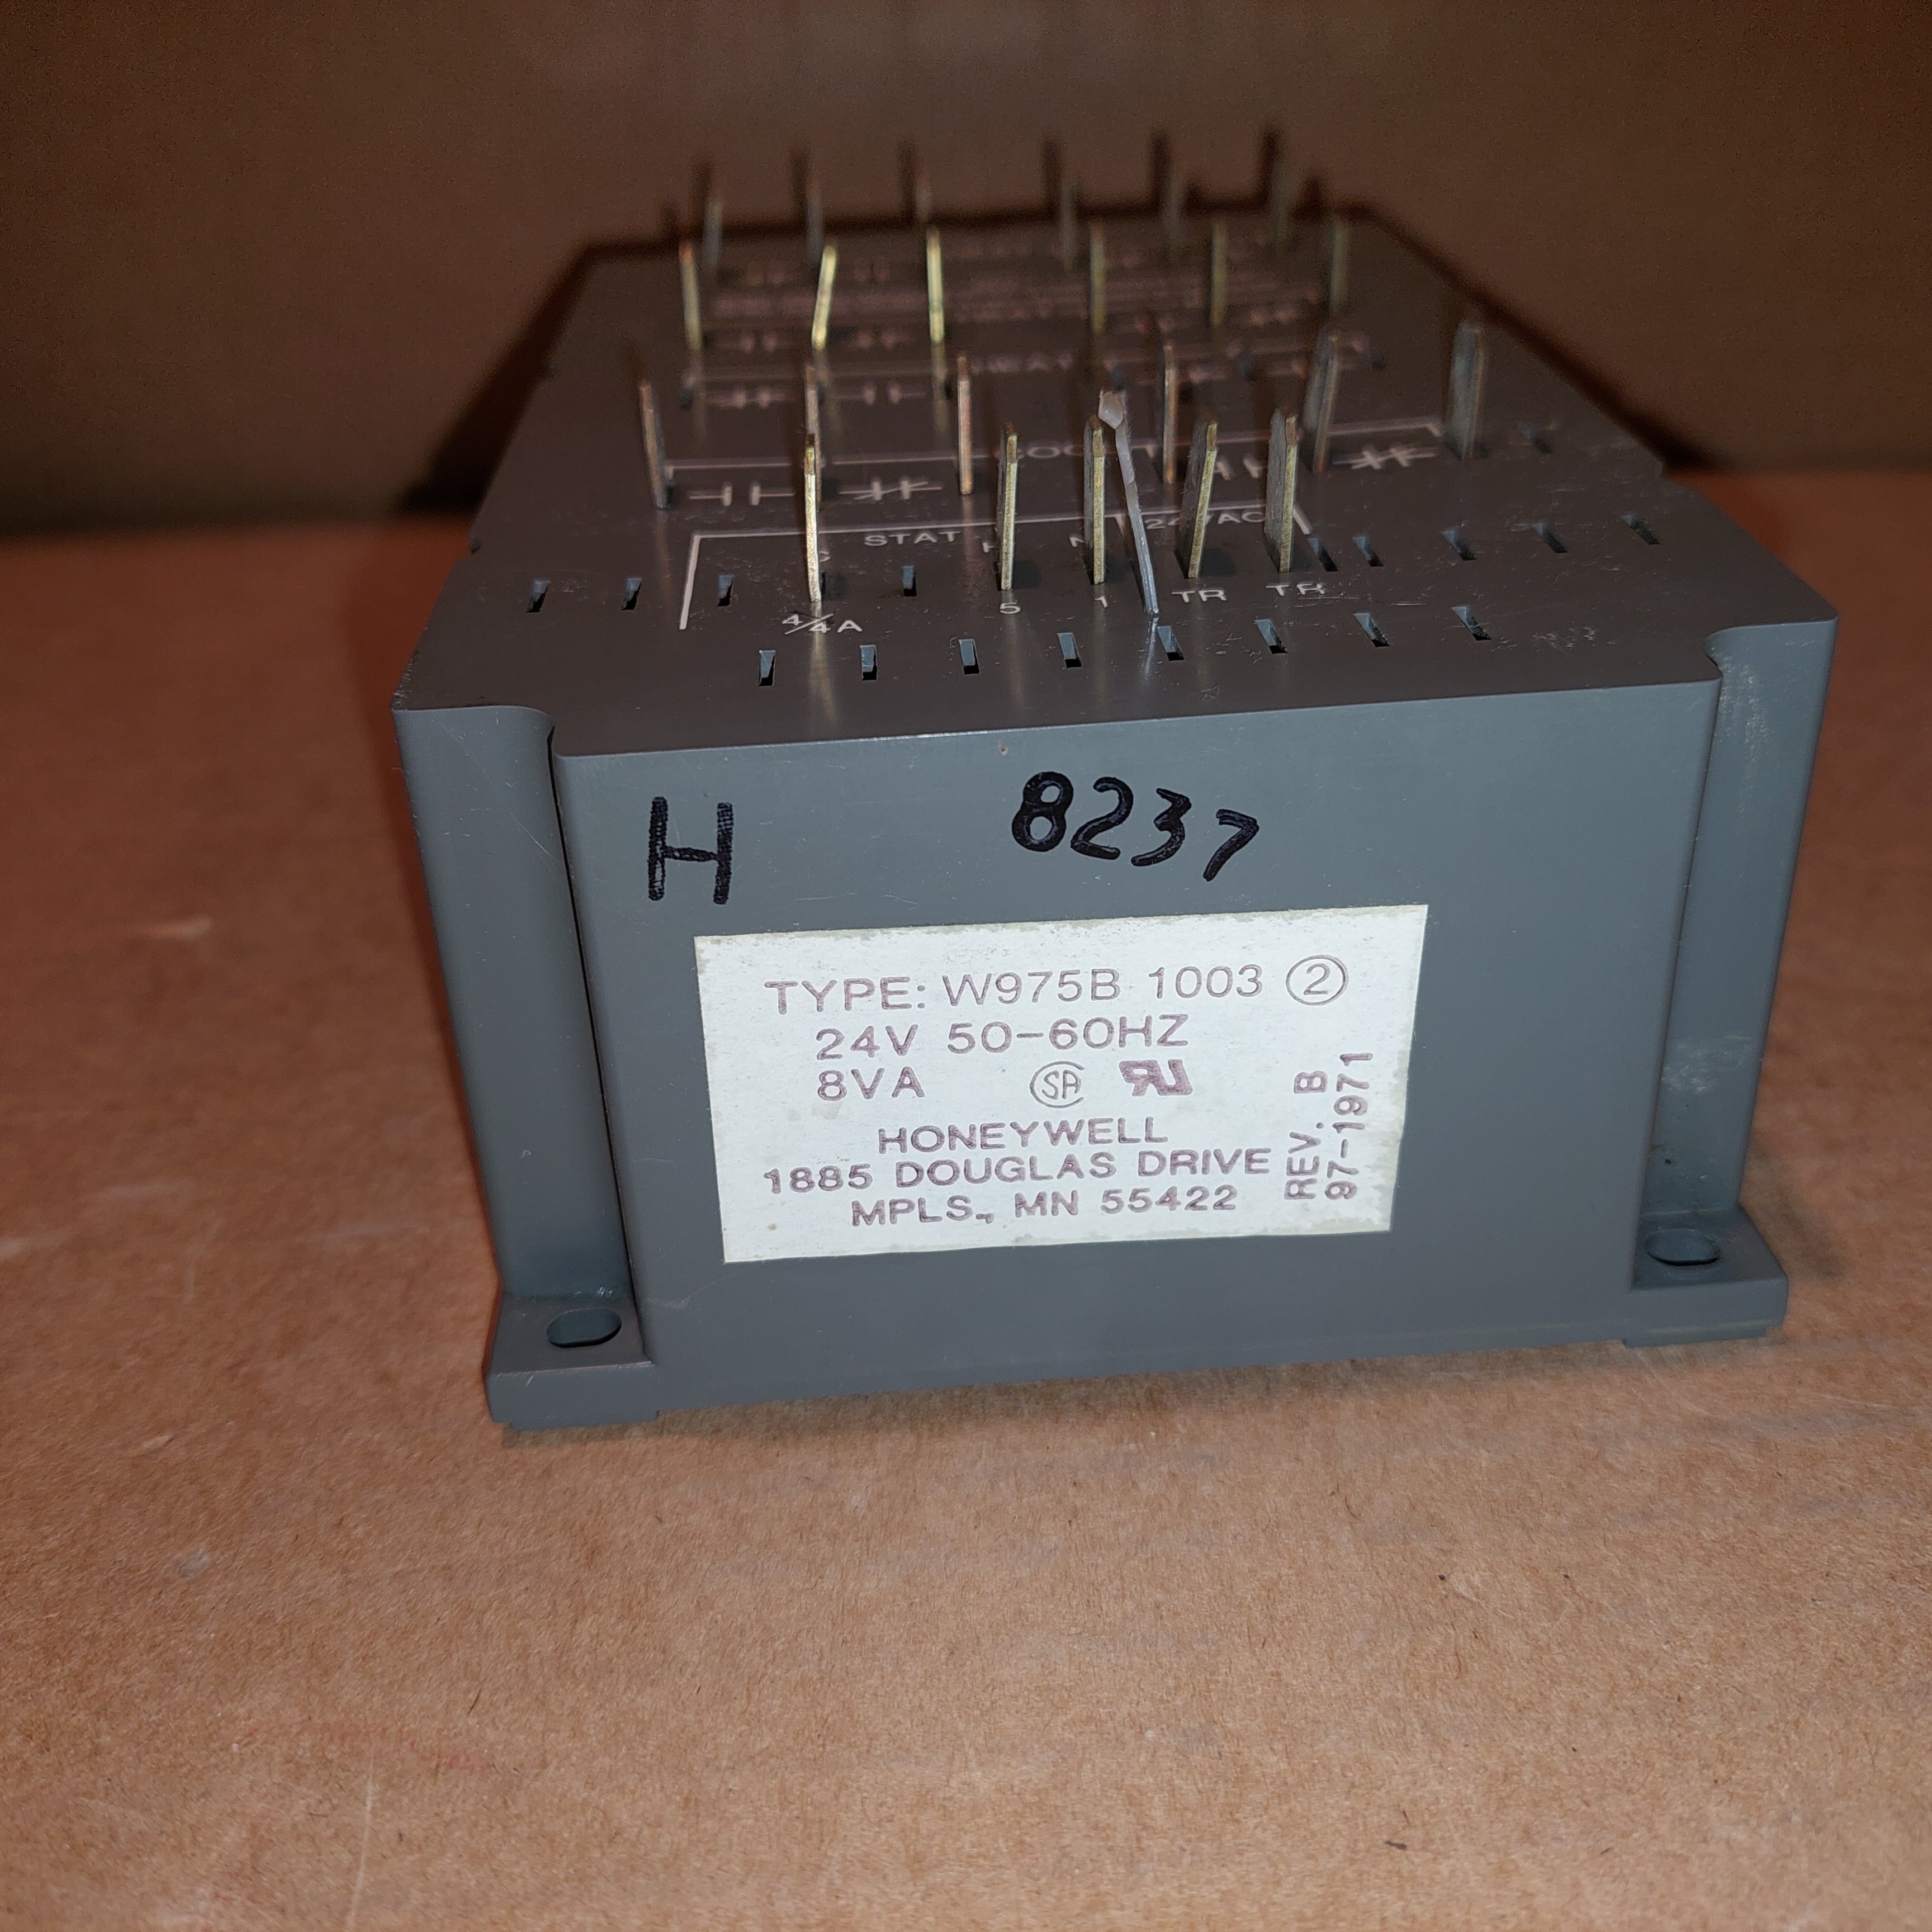 HONEYWELL W975B-1003 Multizone Load Analyzer 3 Heat/Cool Used